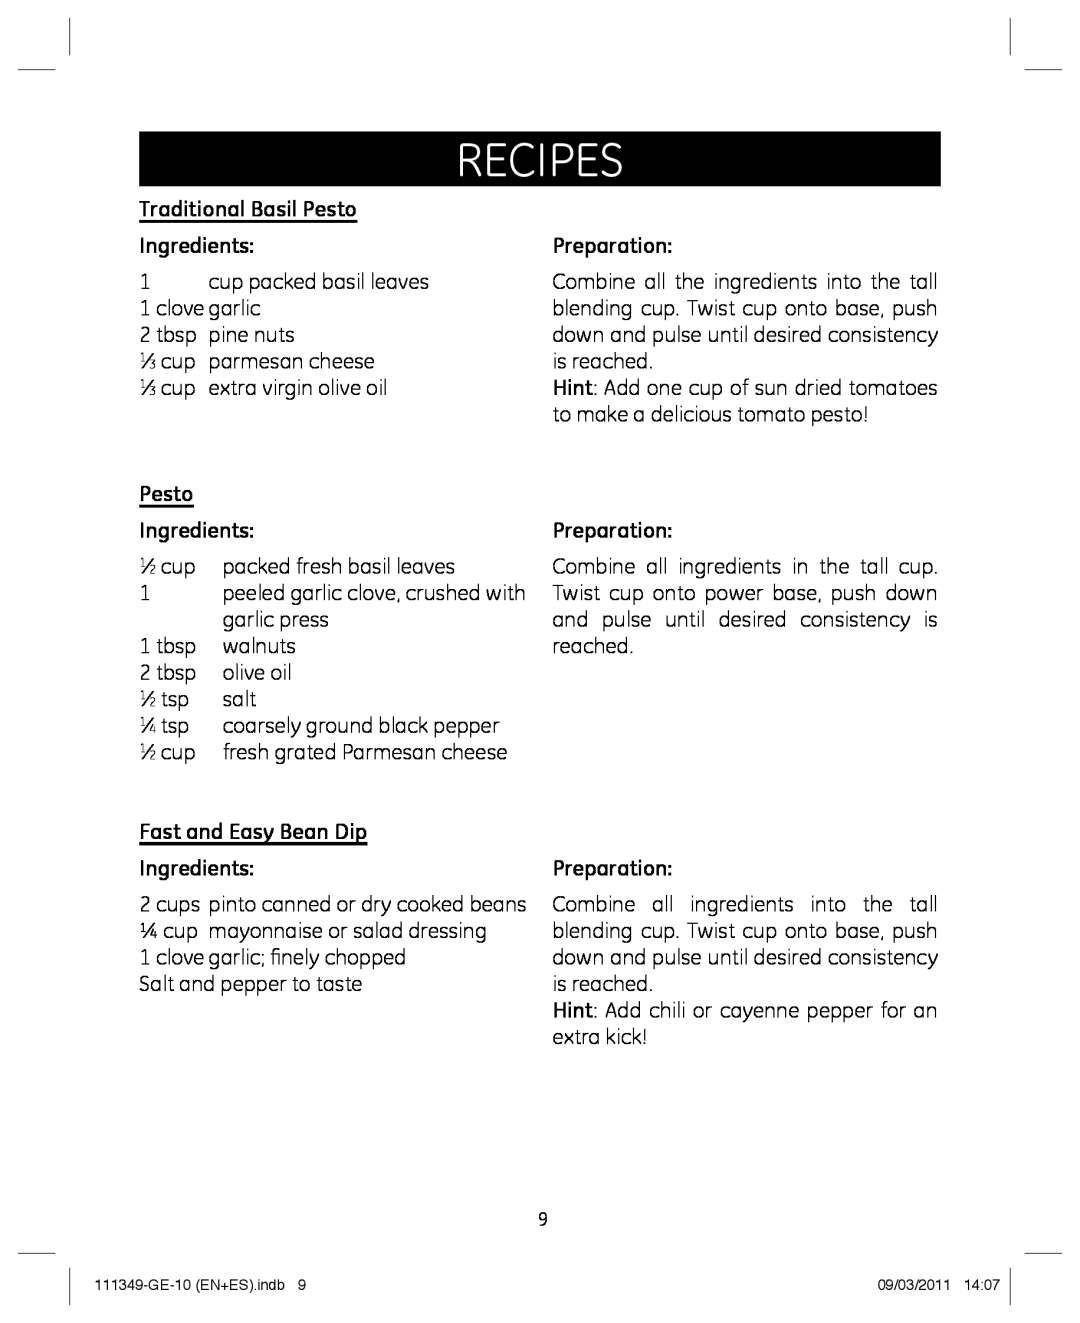 GE 898679 manual Traditional Basil Pesto, Fast and Easy Bean Dip Ingredients, recipes, Preparation 